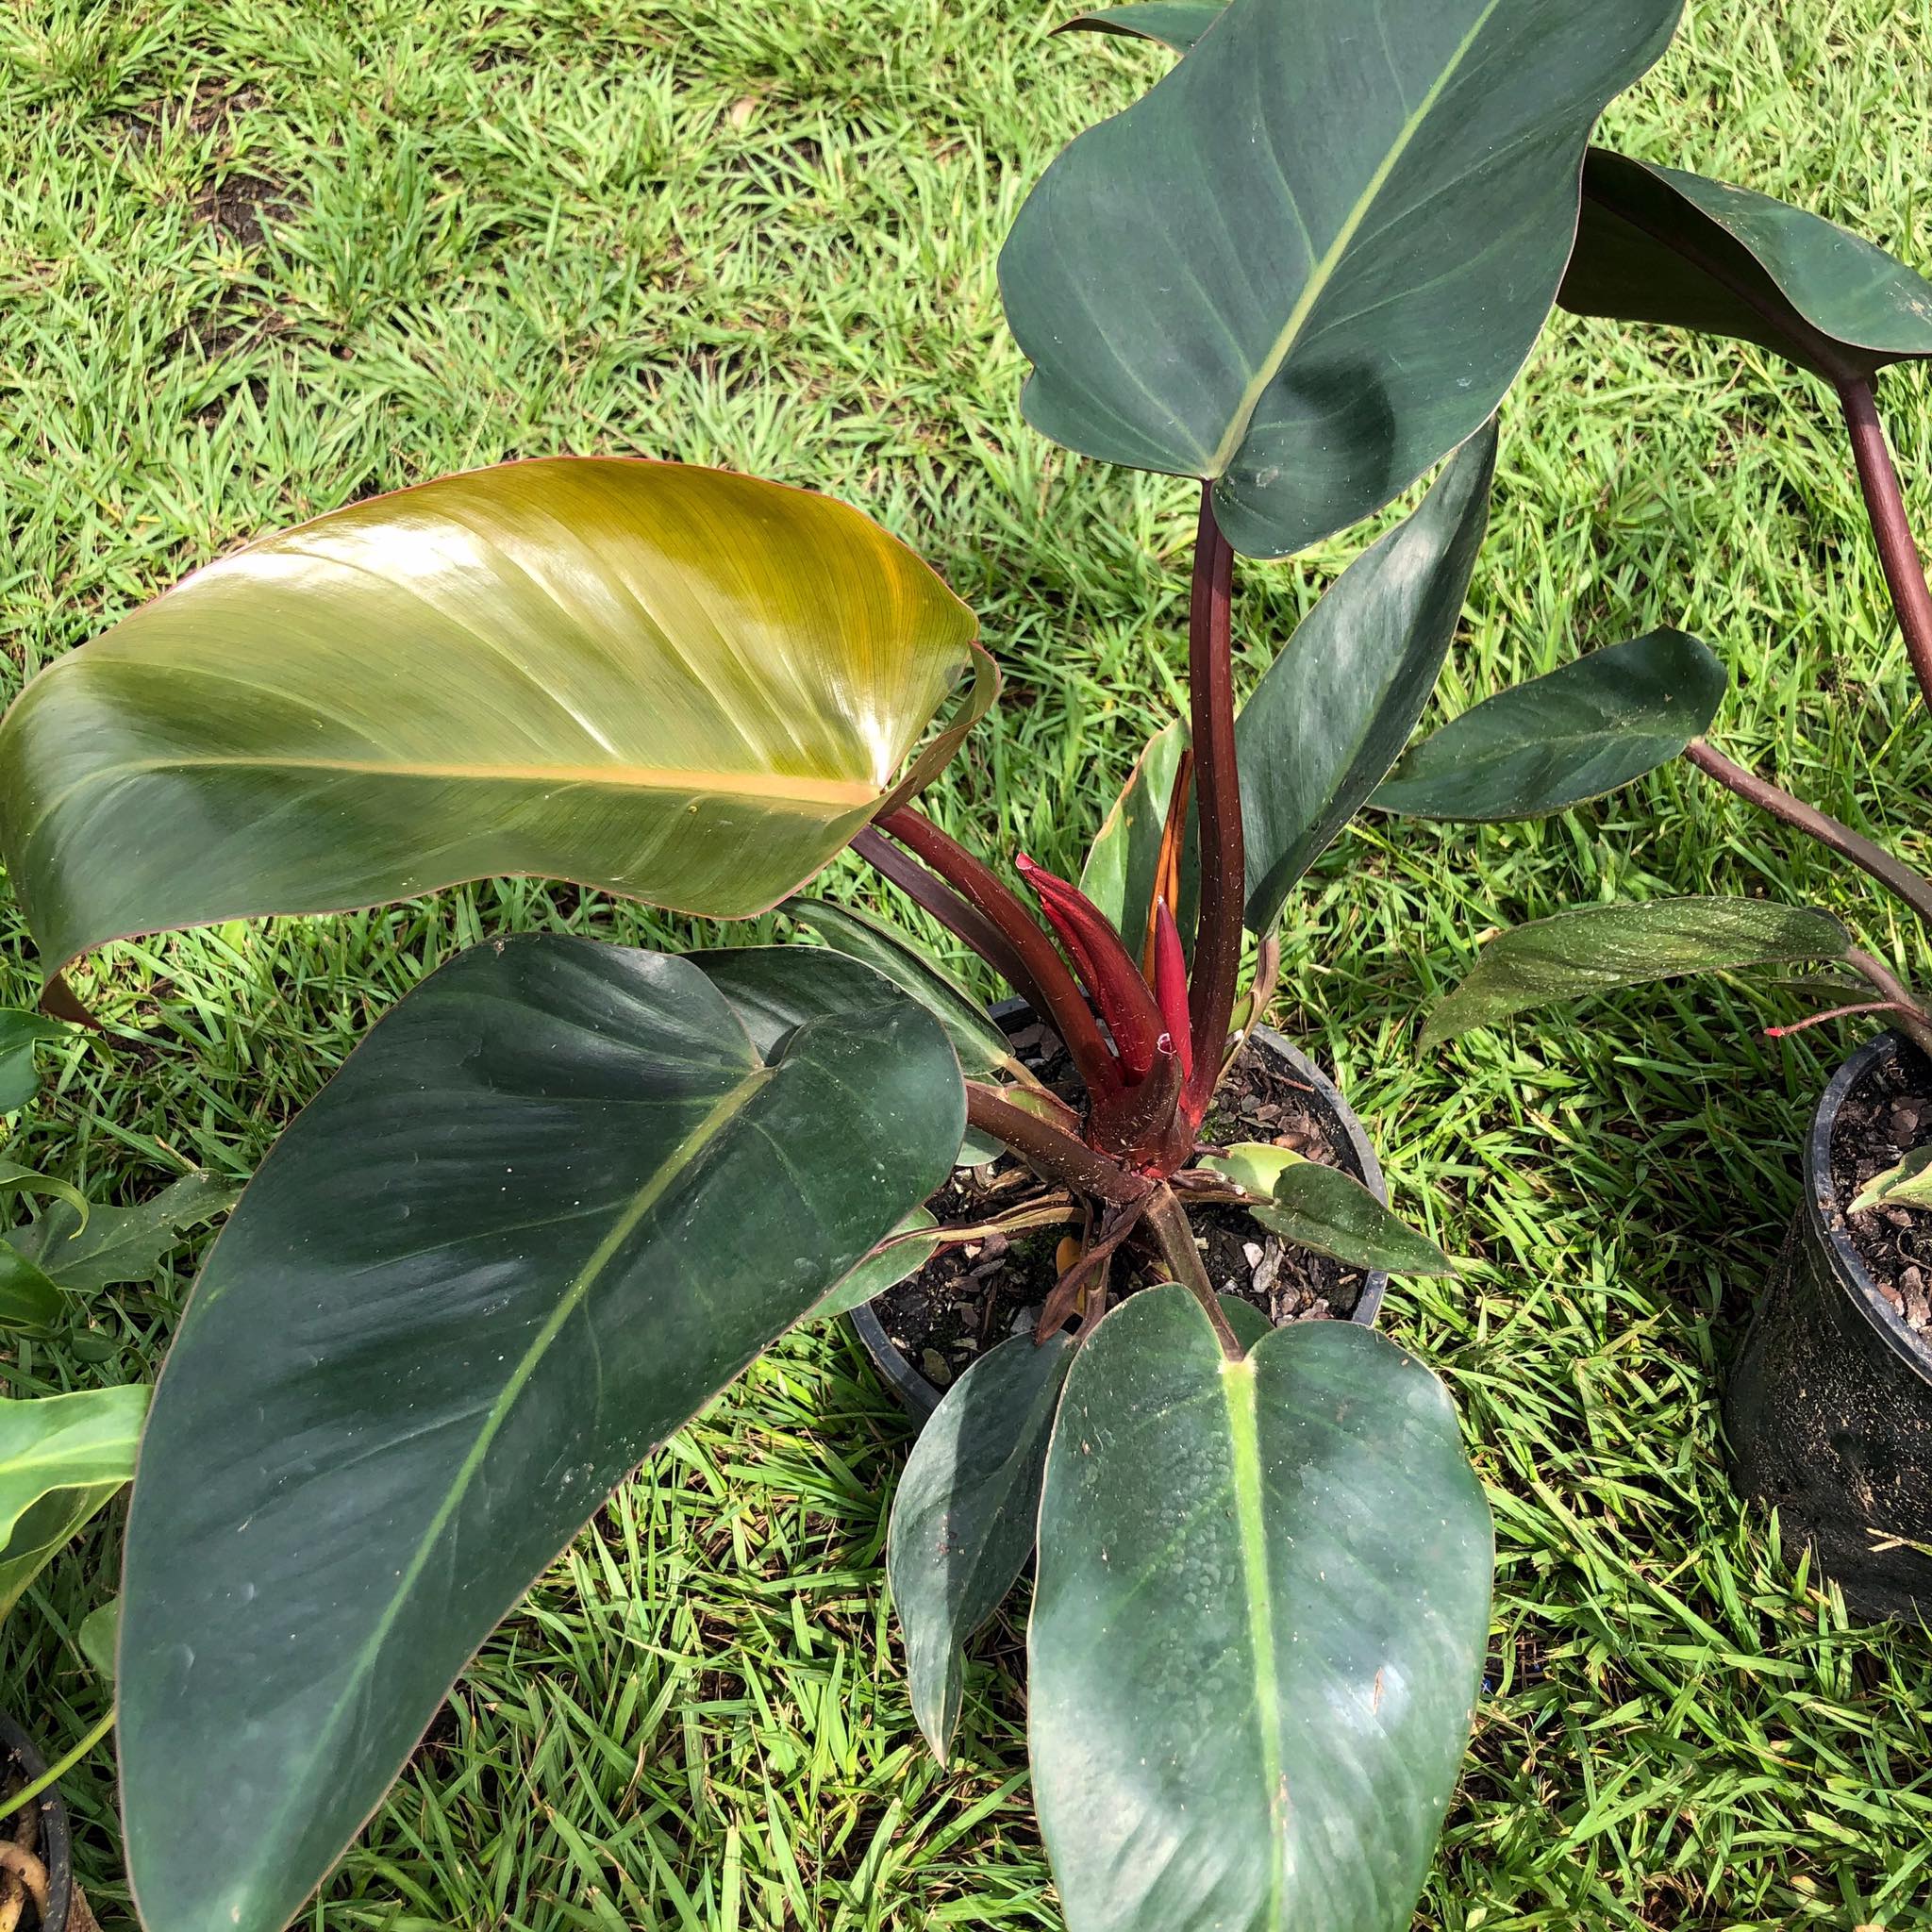 Rojo Congo Philodendron